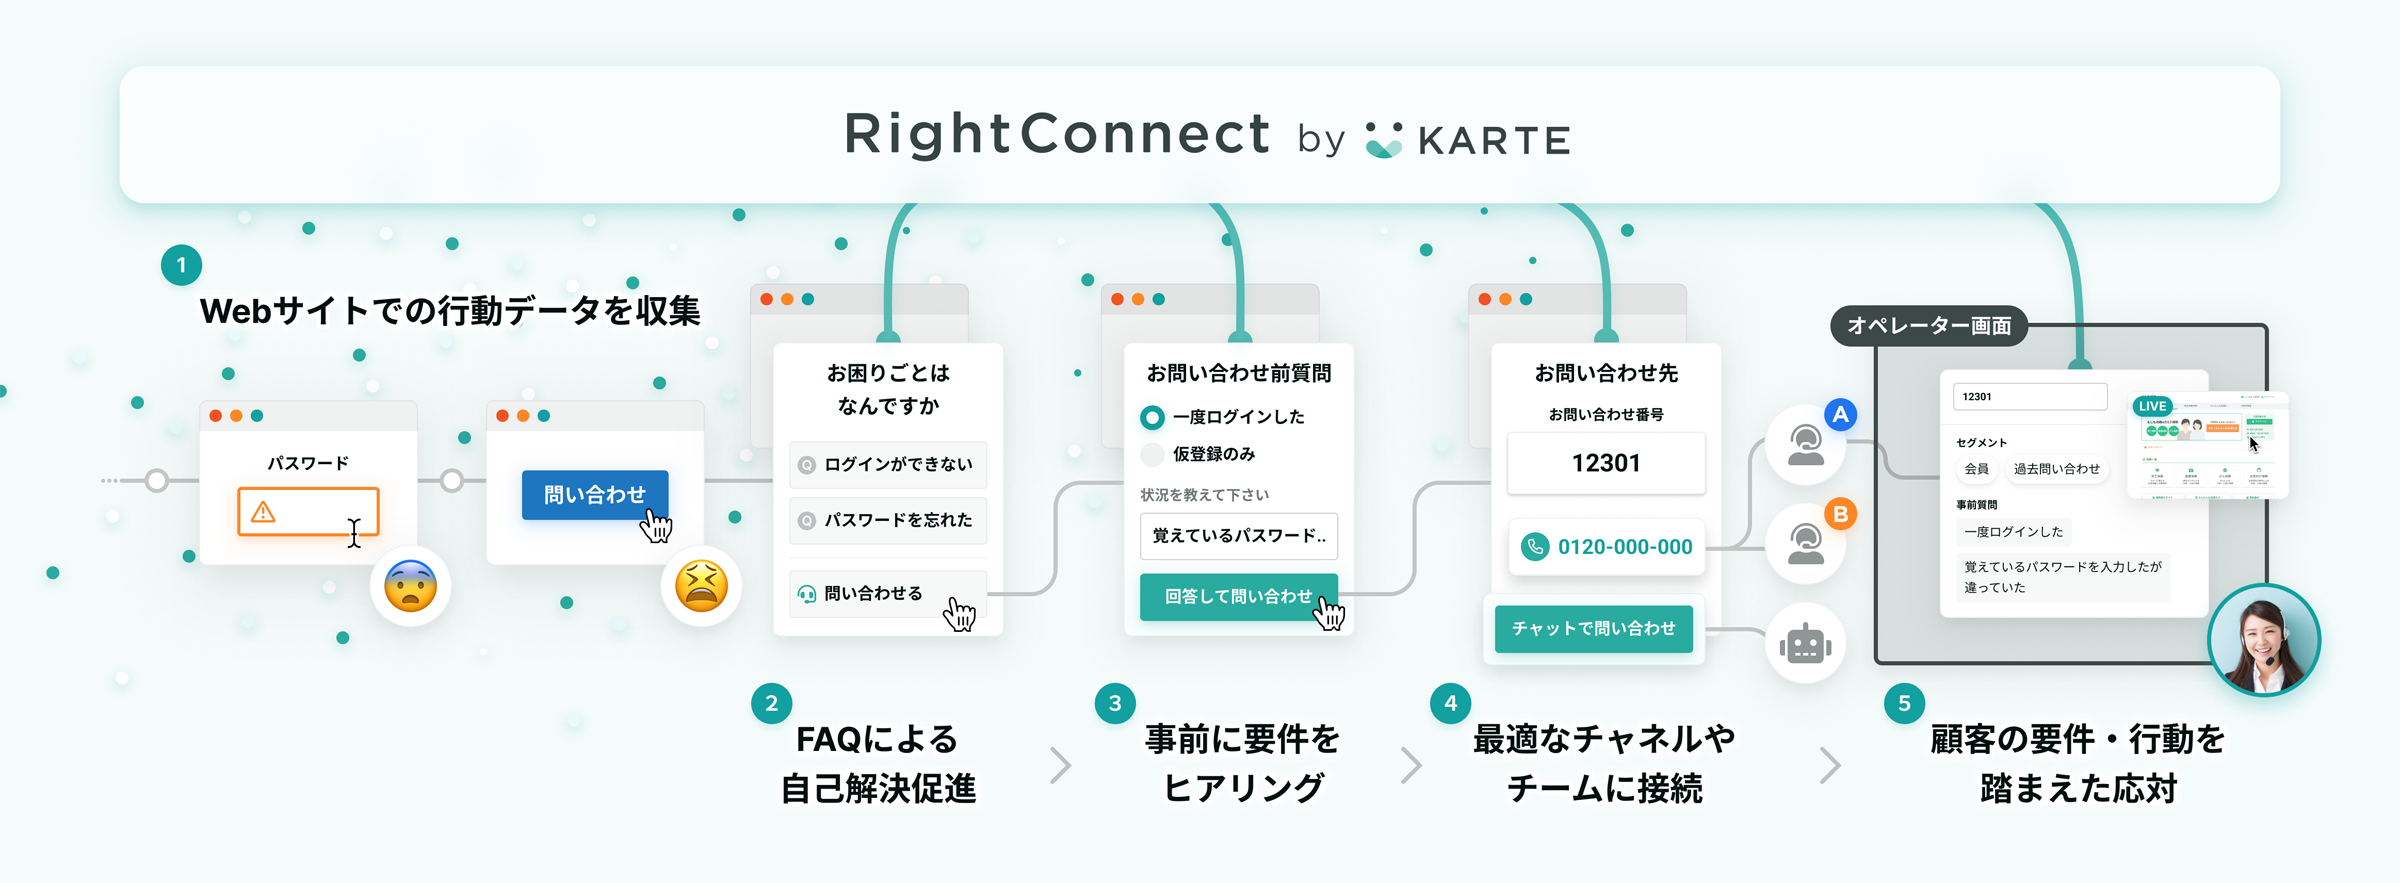 RightConnect by KARTEのシステム連携イメージ